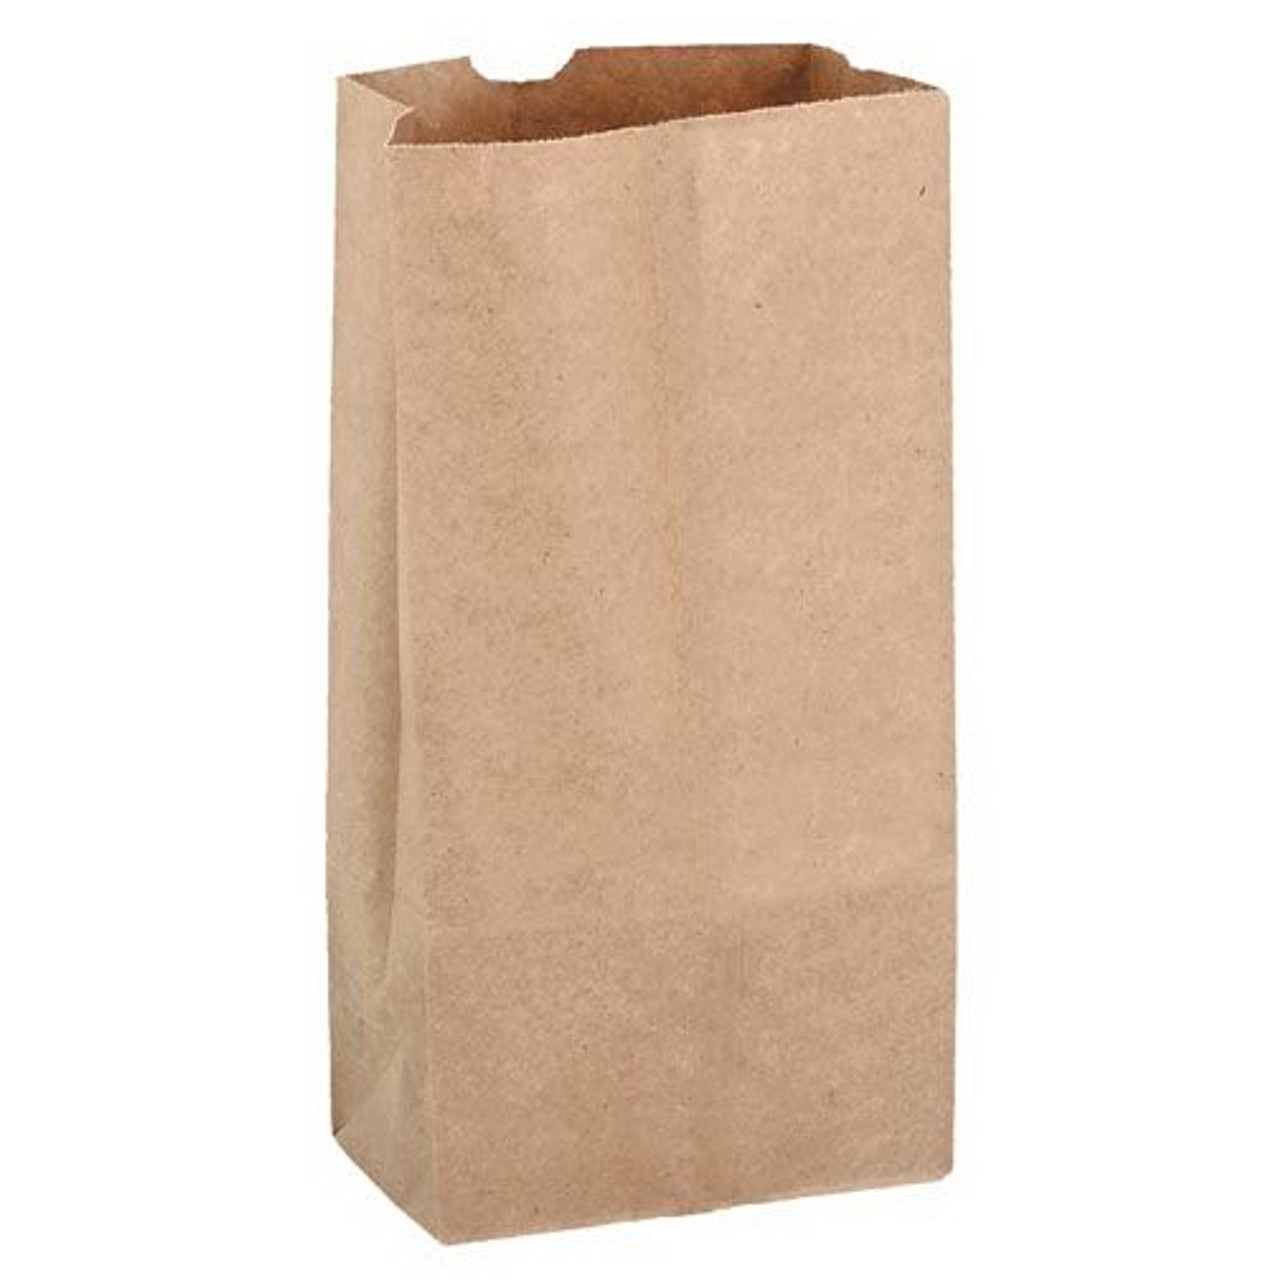 Kraft Paper Bags #5 - 5.25" x 3.4" x 10.5" - Case of 500